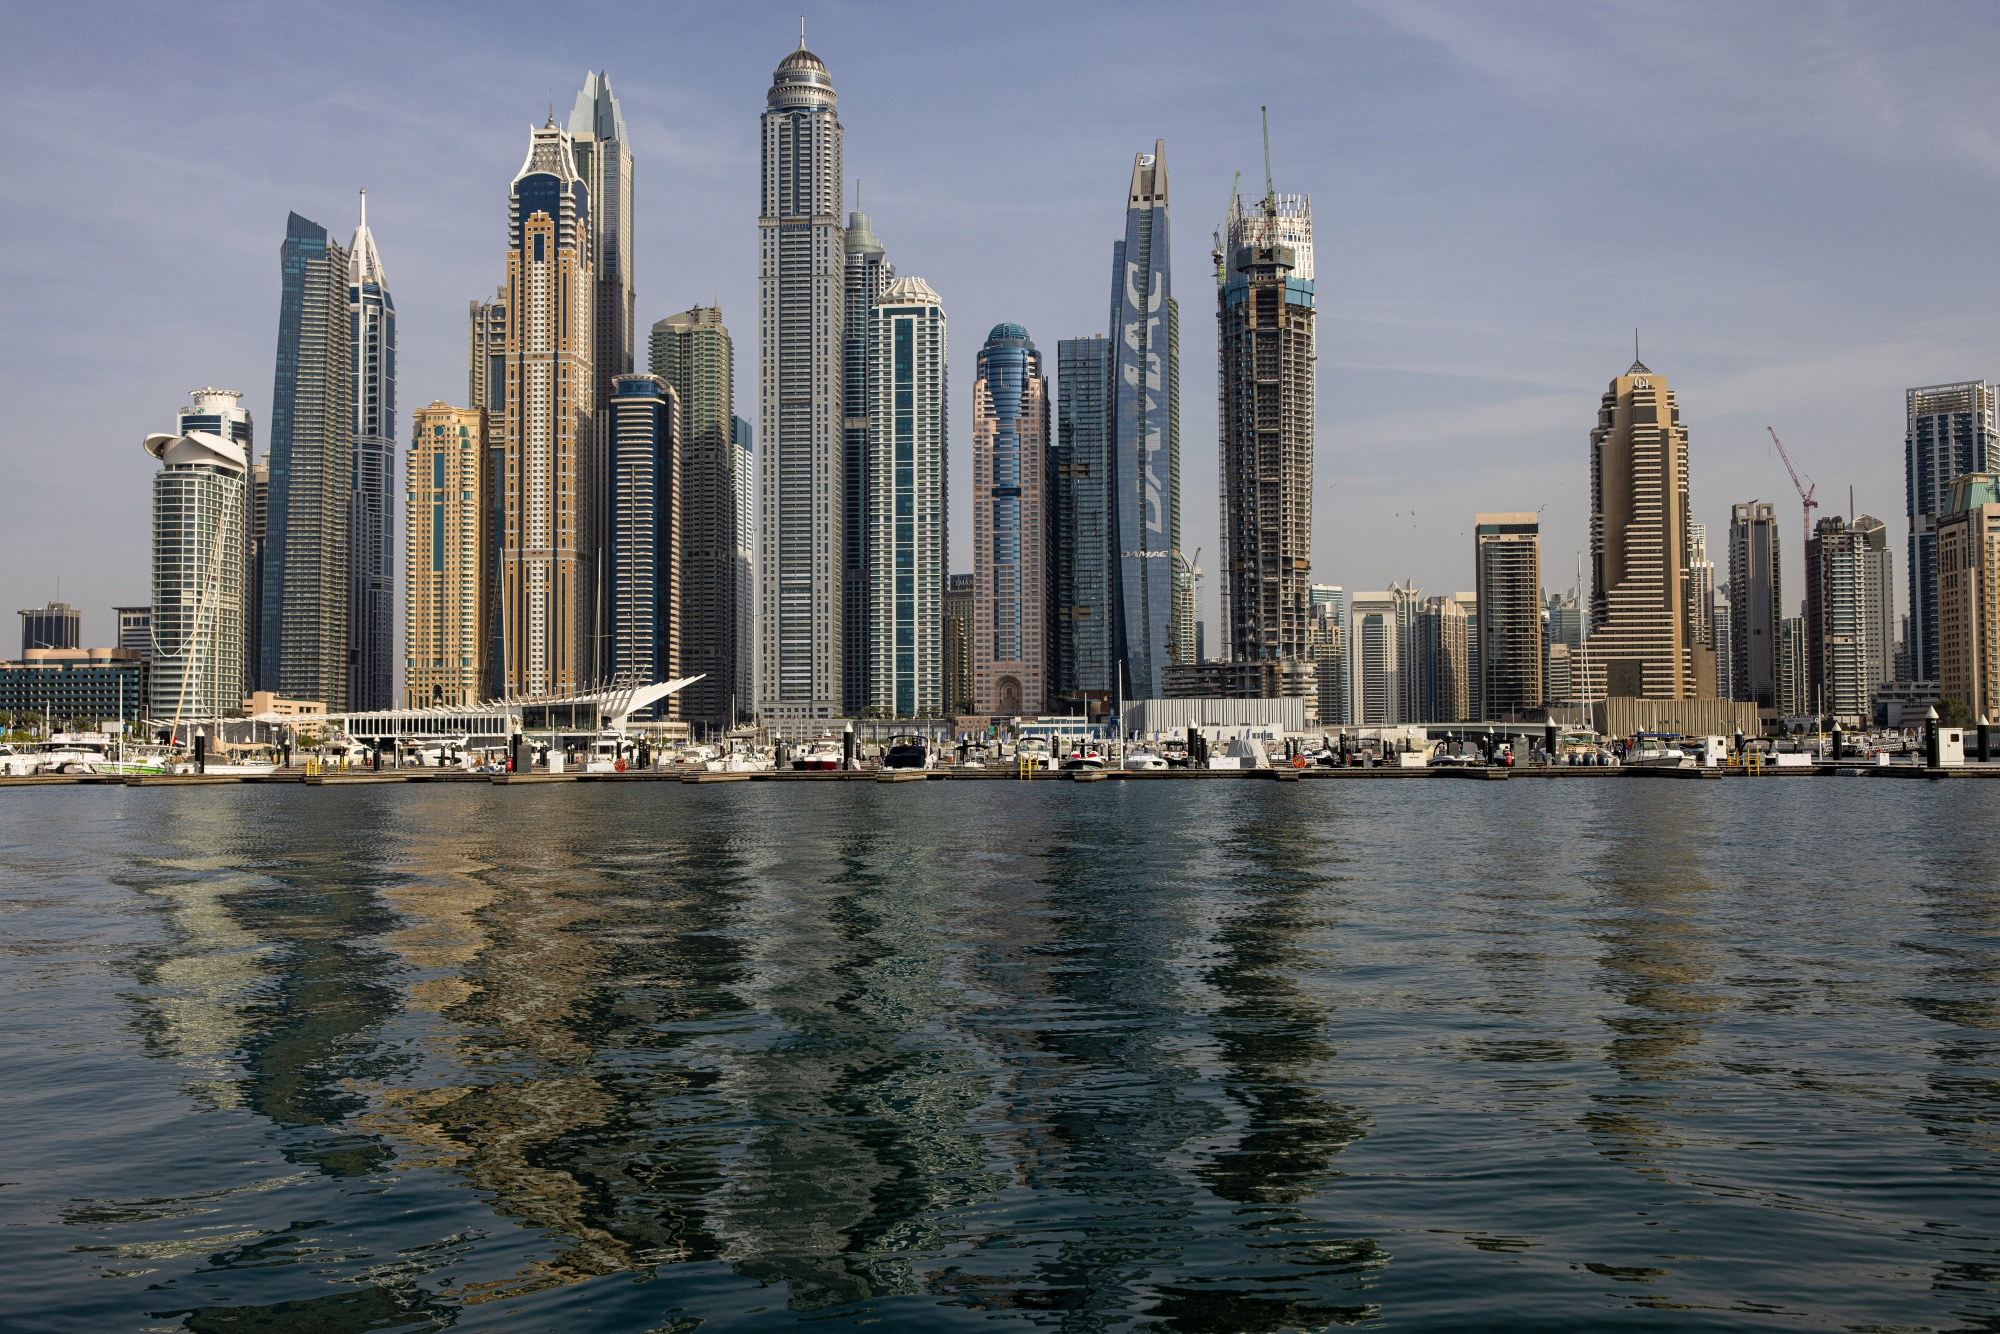 Residential skyscrapers in the Dubai Marina district, United Arab Emirates.